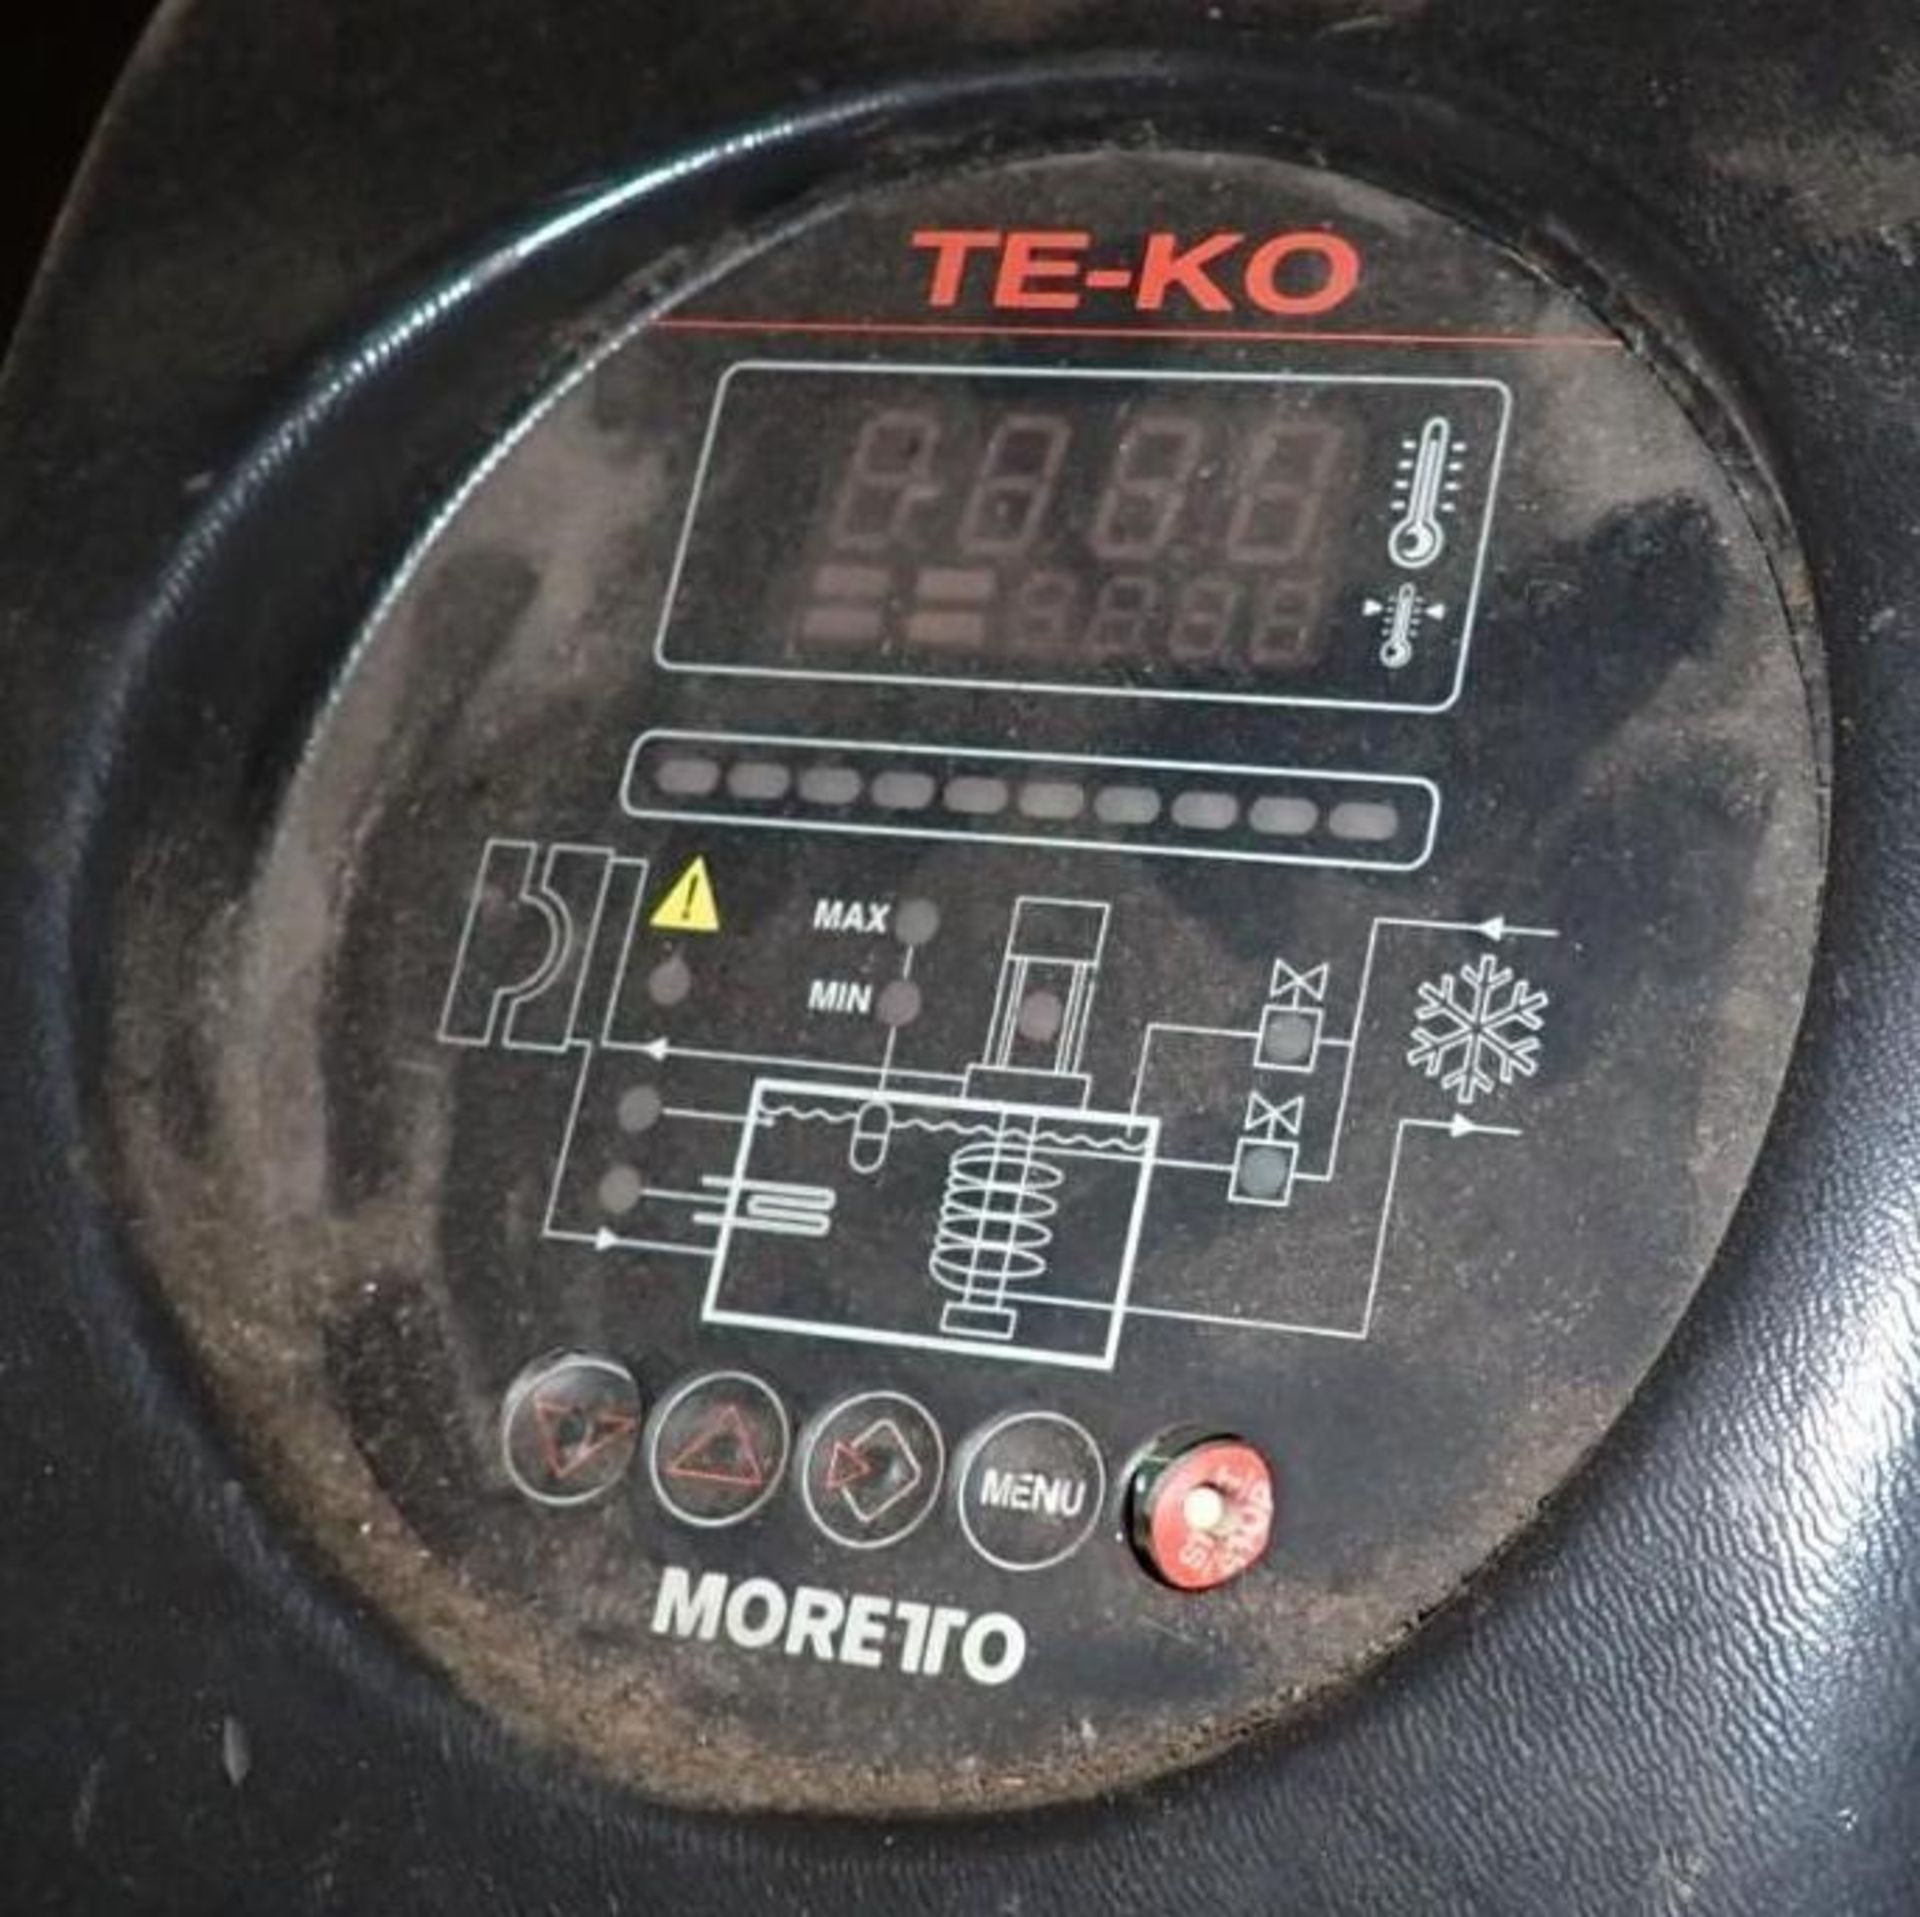 Moretto / Te-Ko #TWK9S Thermoregulator - Image 5 of 7